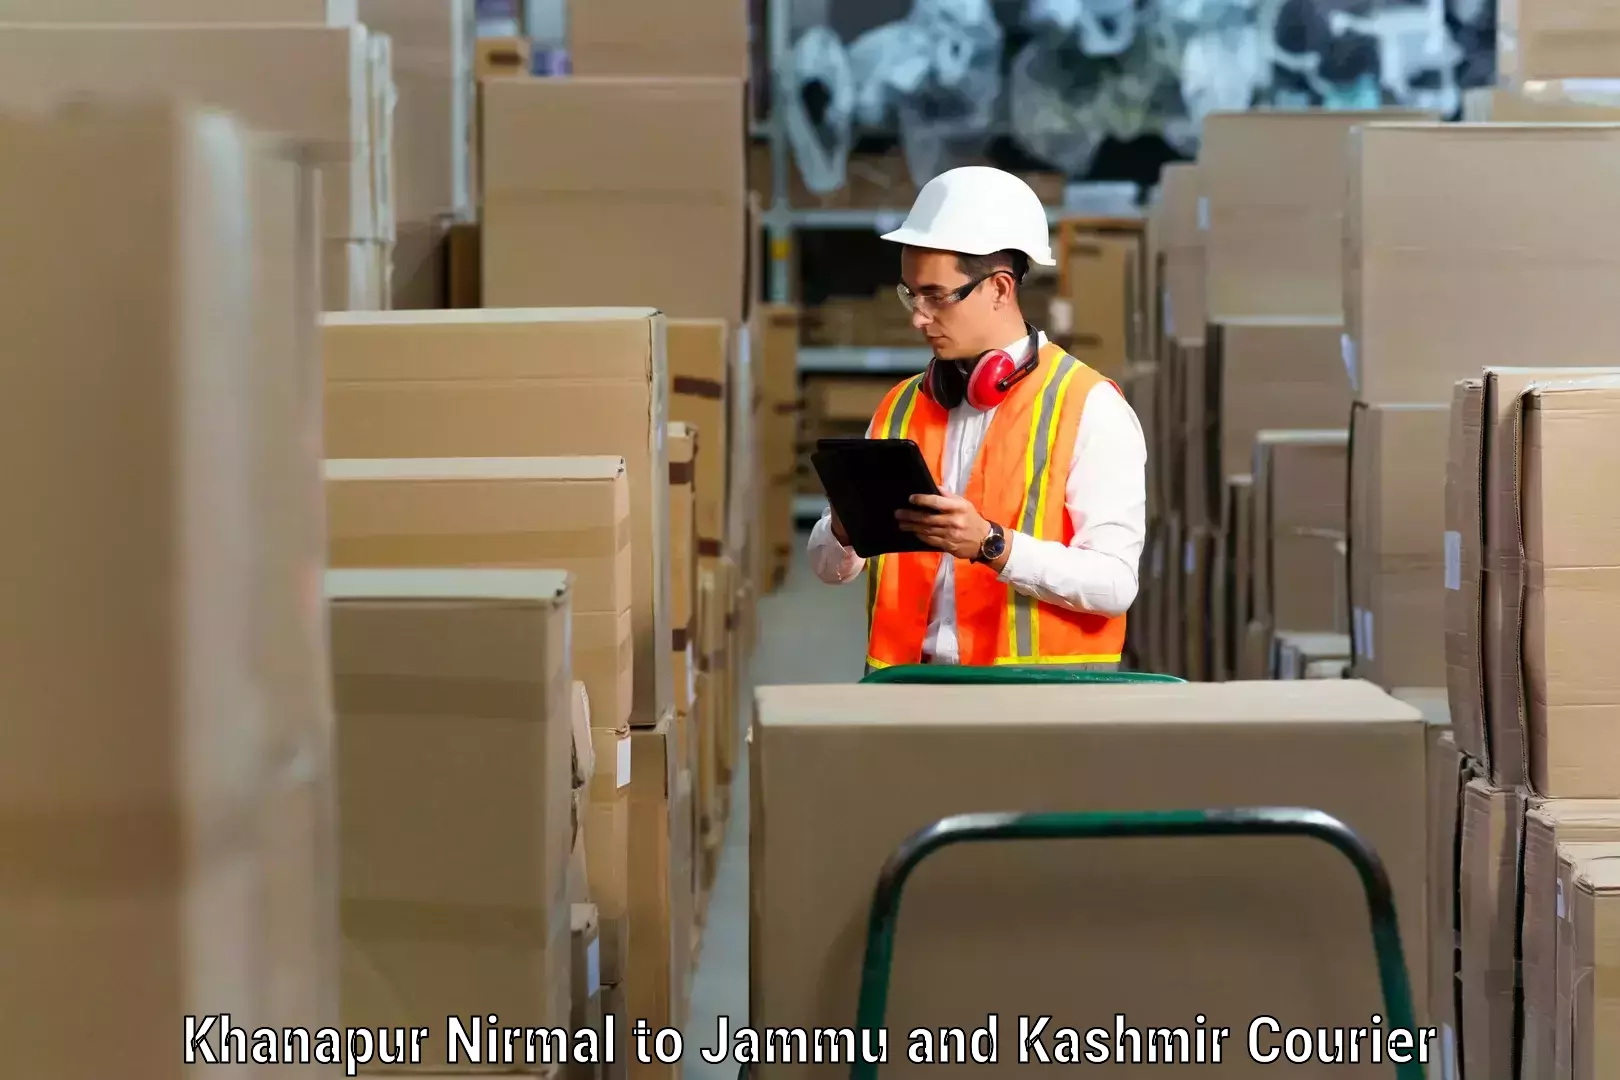 Furniture moving experts Khanapur Nirmal to Baramulla